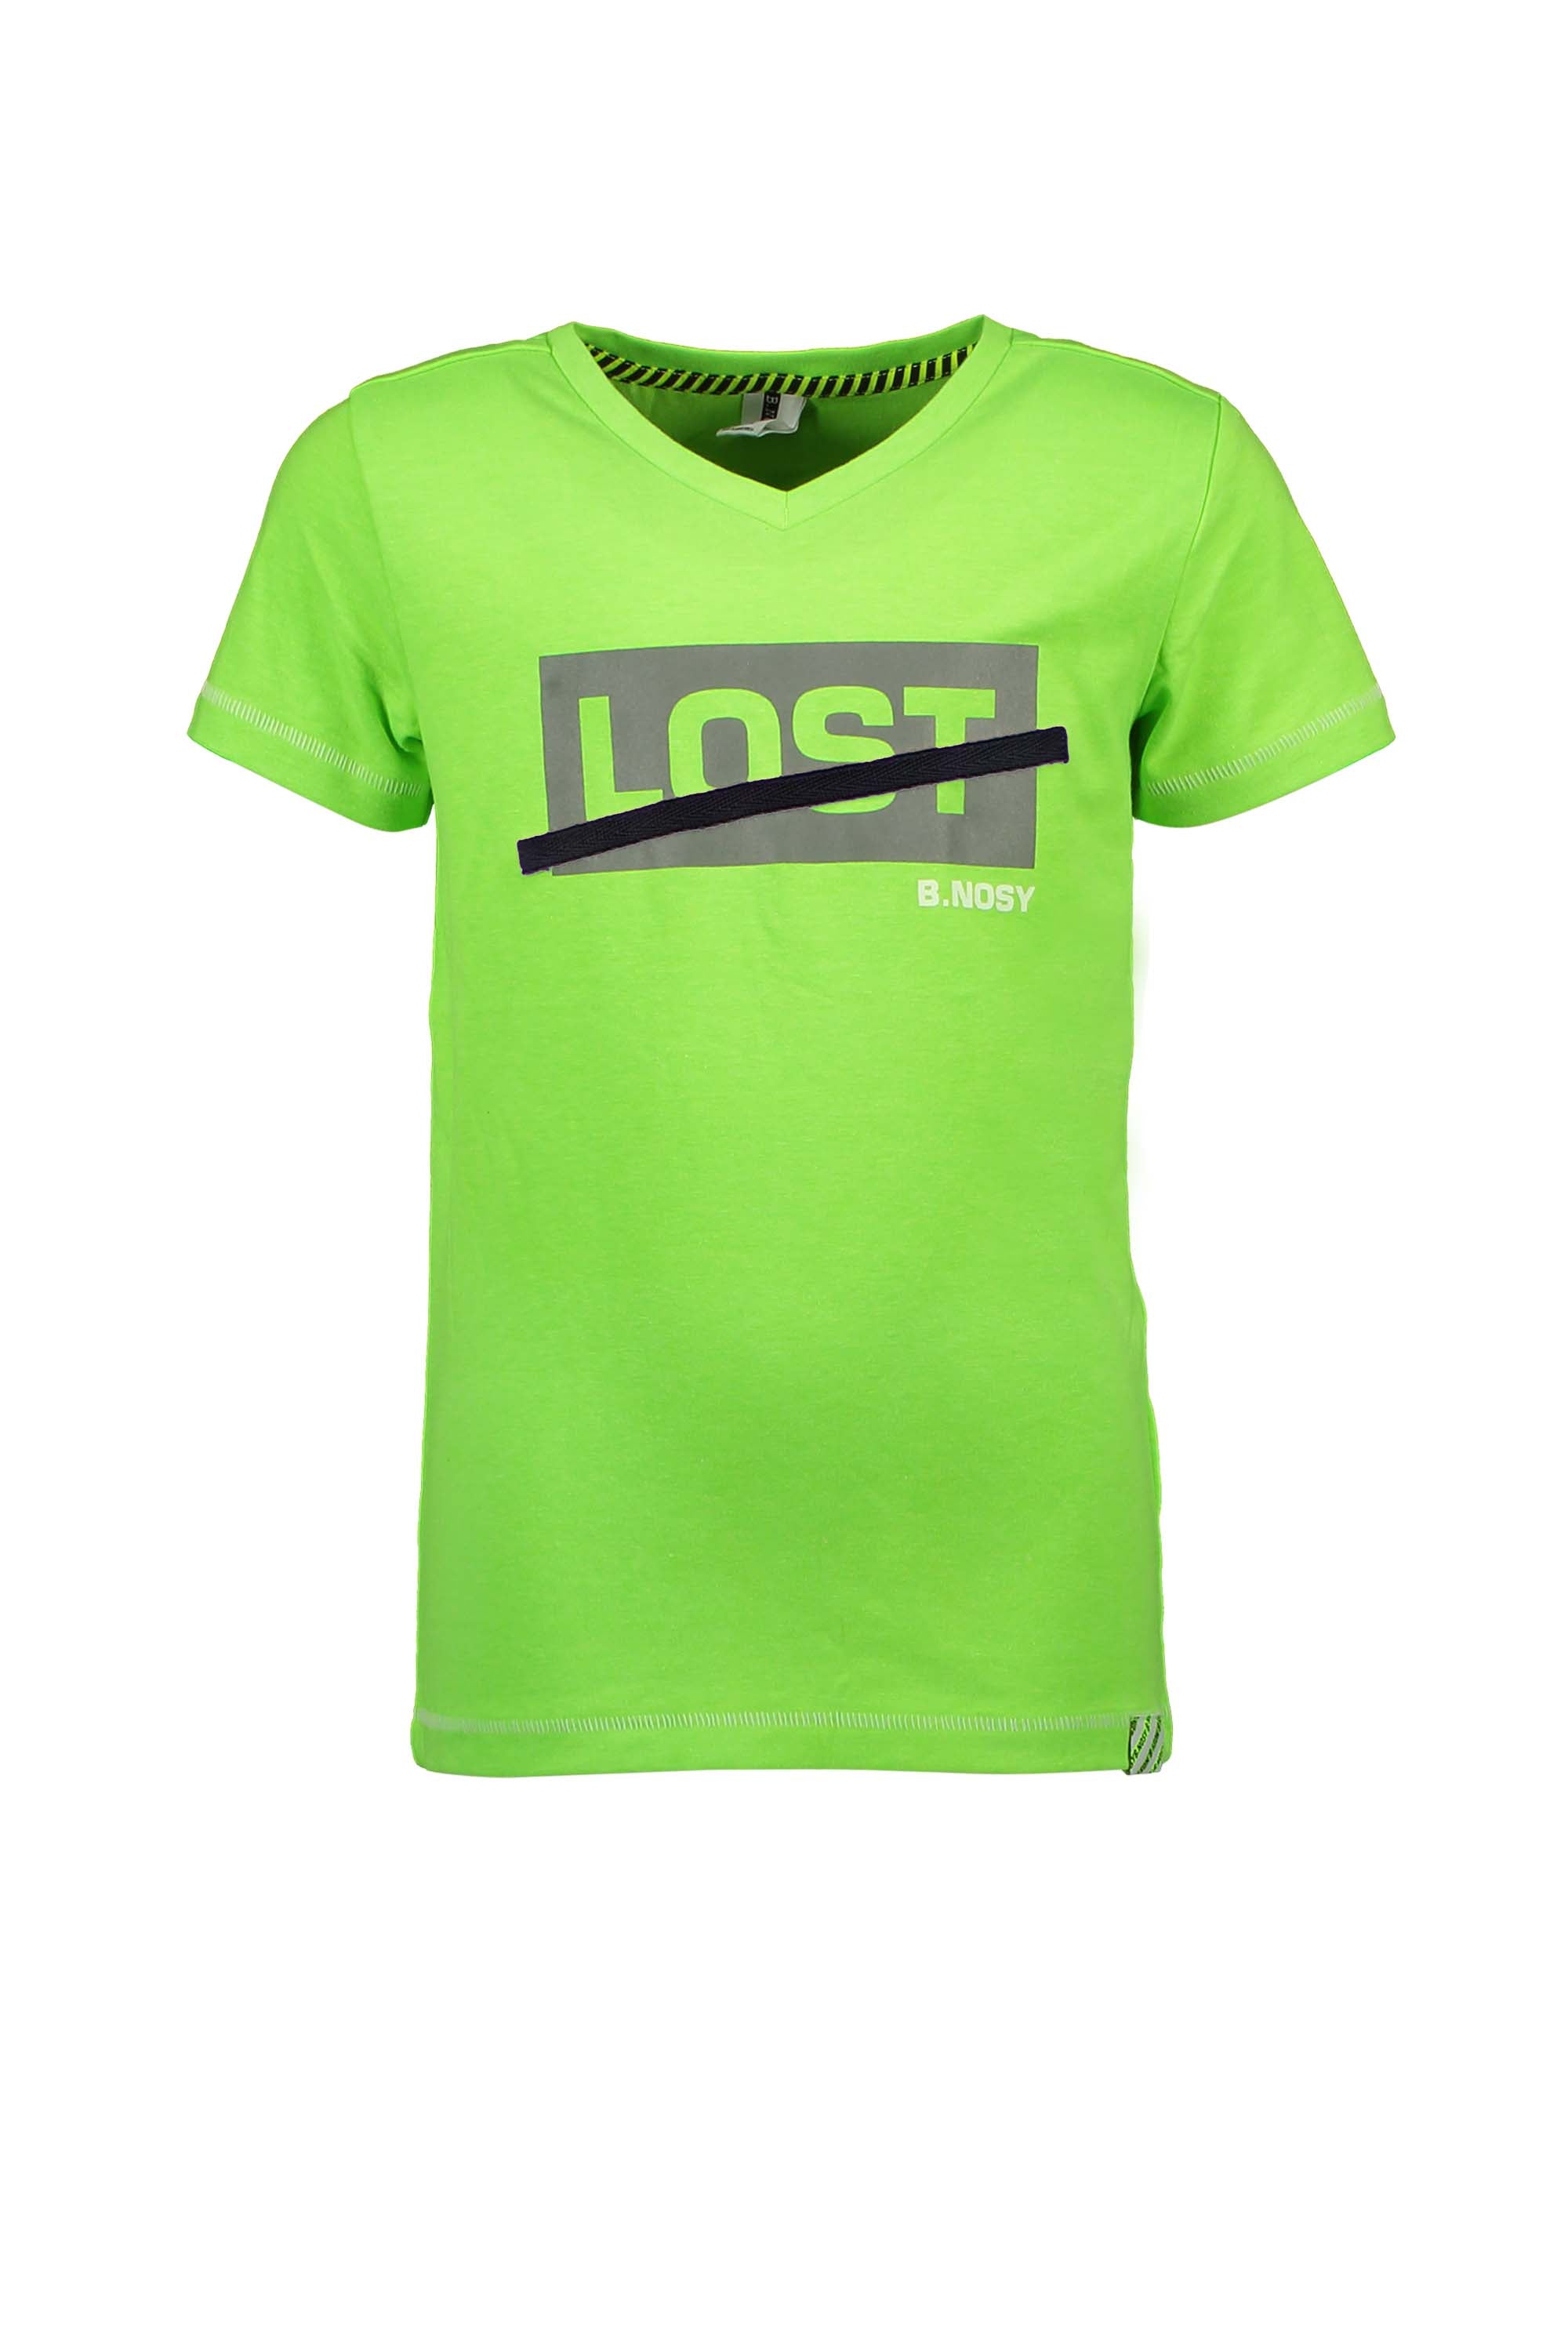 T-Shirt Lost Green